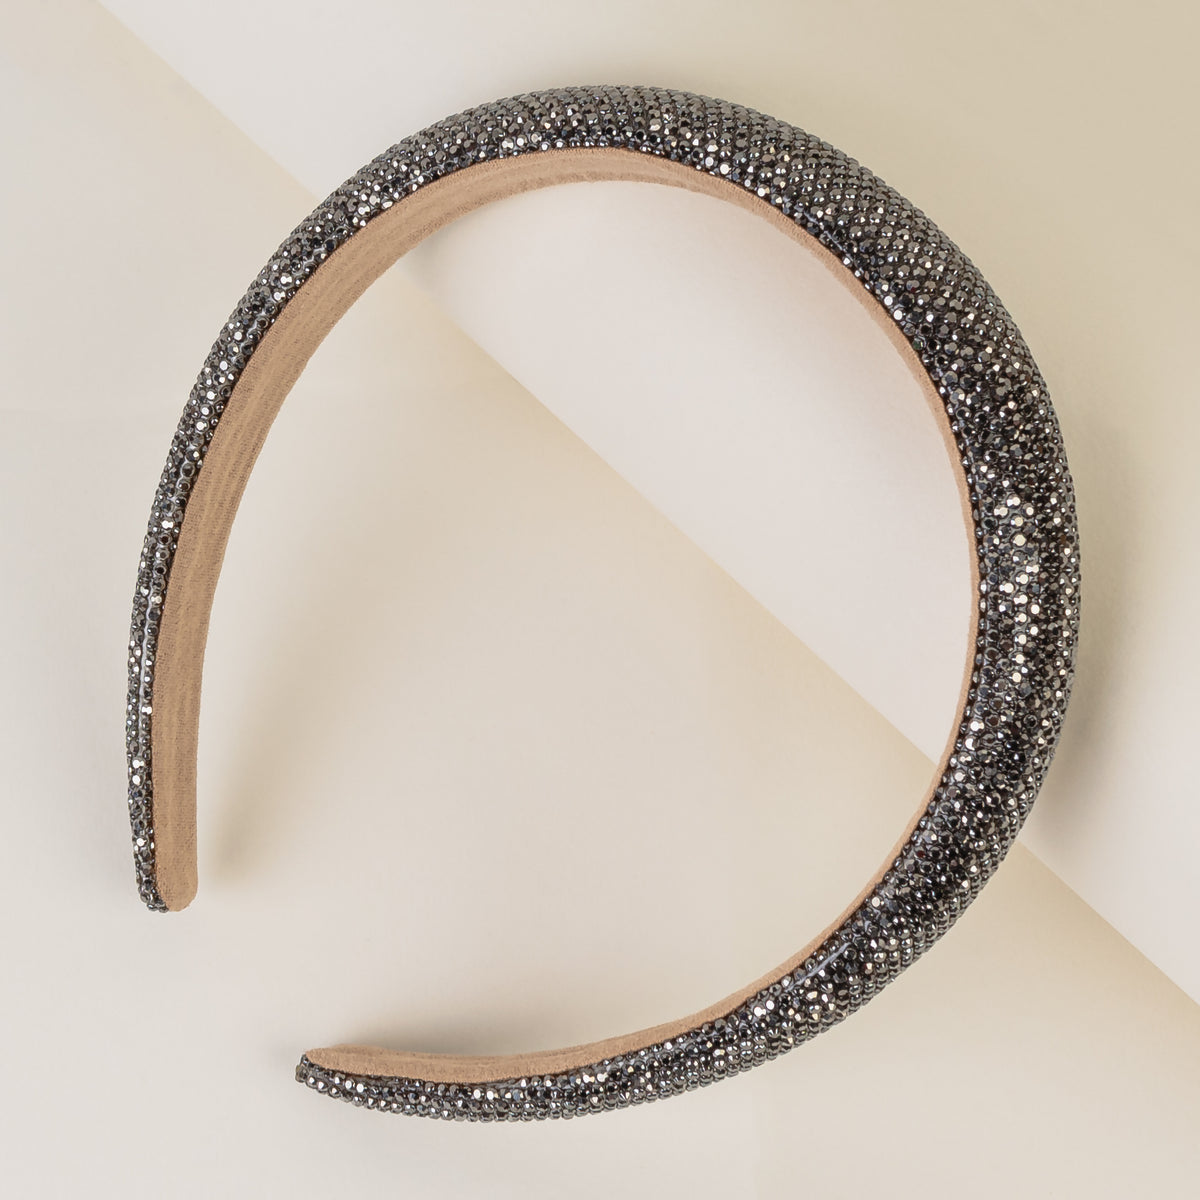 91001 - Rhinestone Headband - Black Diamond